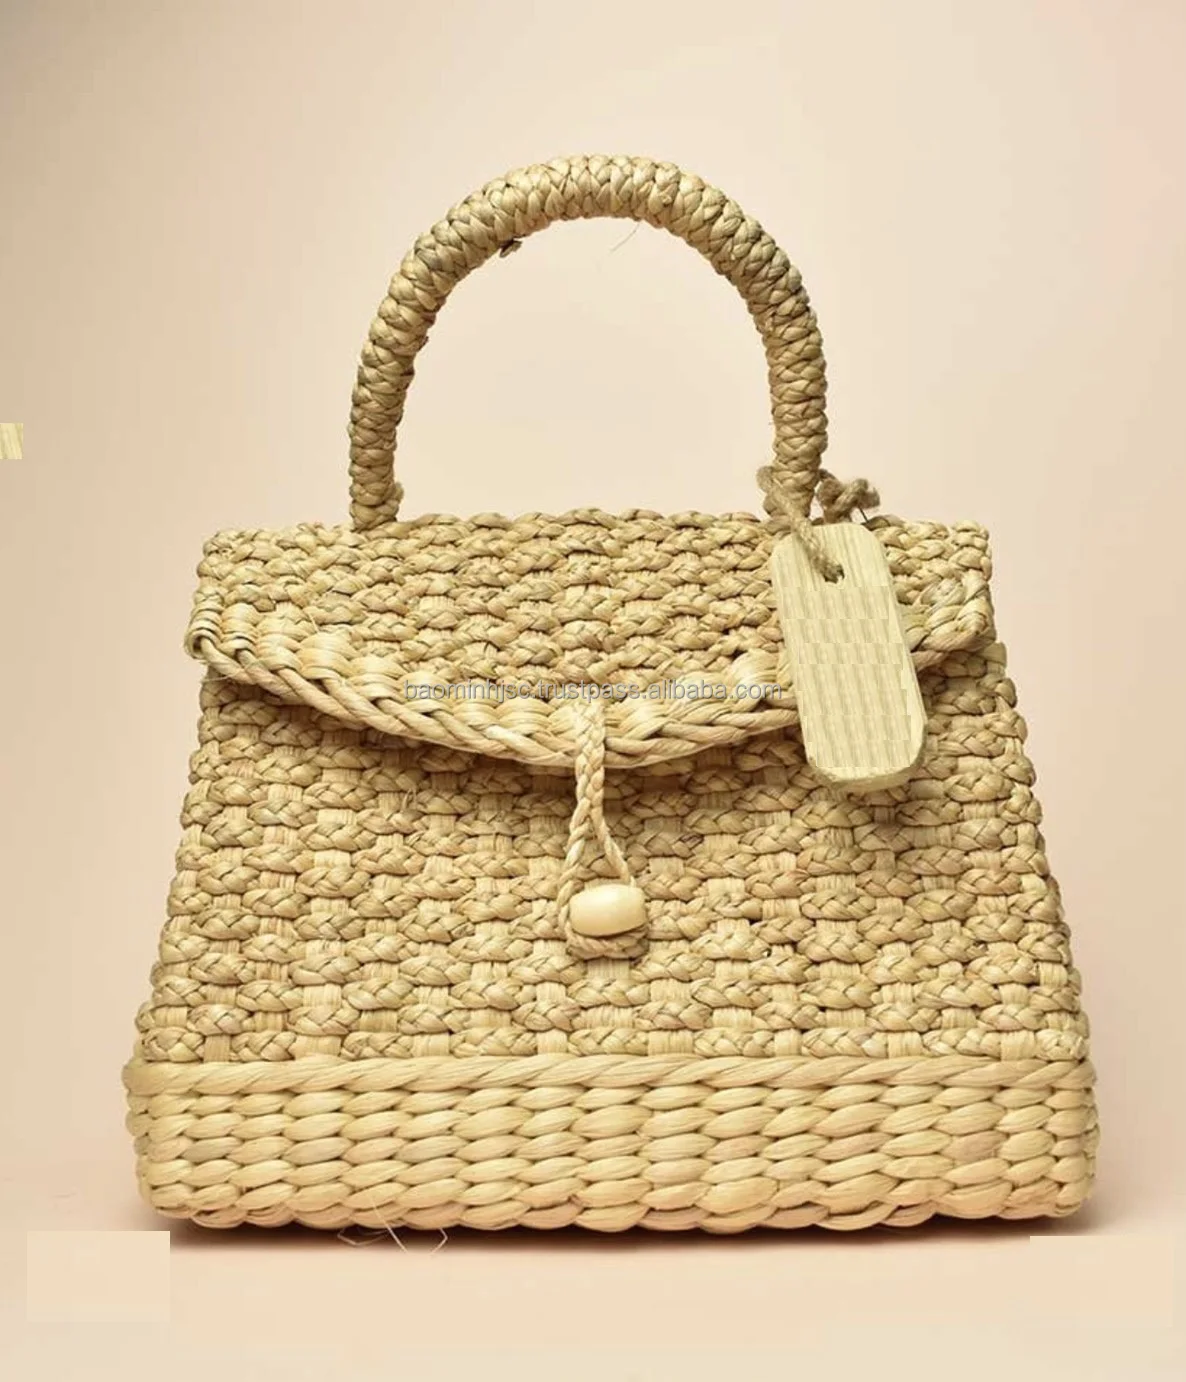 Luxury Rattan Cane Webbing Cylinder Bucket Bags Handbags - Buy Cane ...